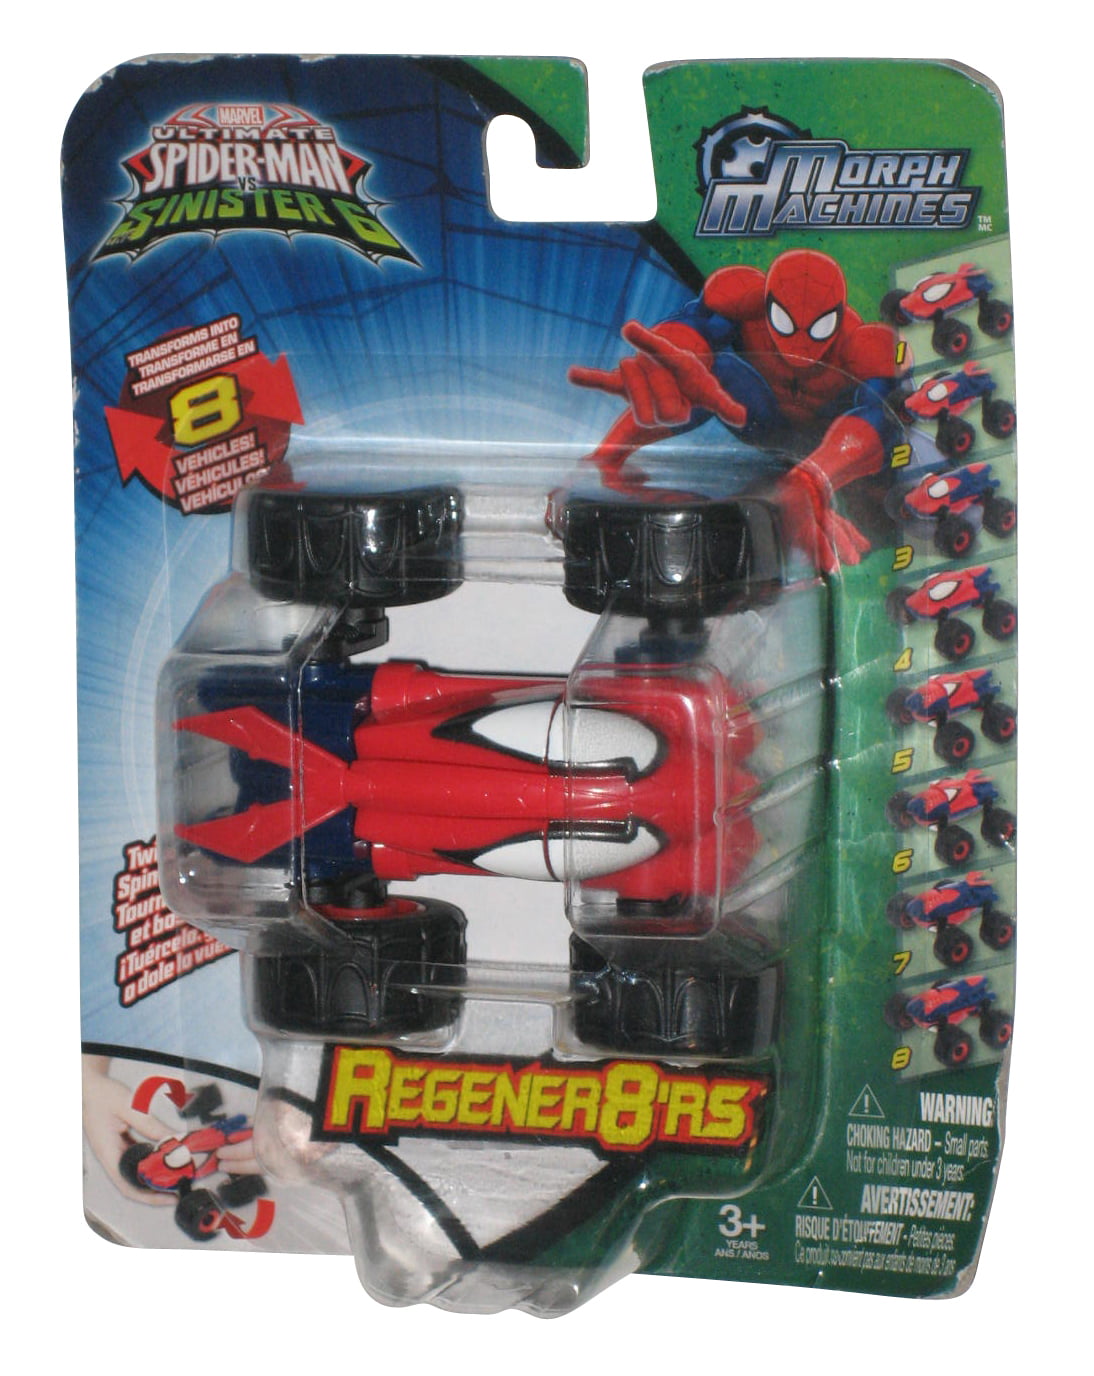 Both Styles Ultimate Spider-Man Sinister 6 Transforming Trucks Regener8’rs! 